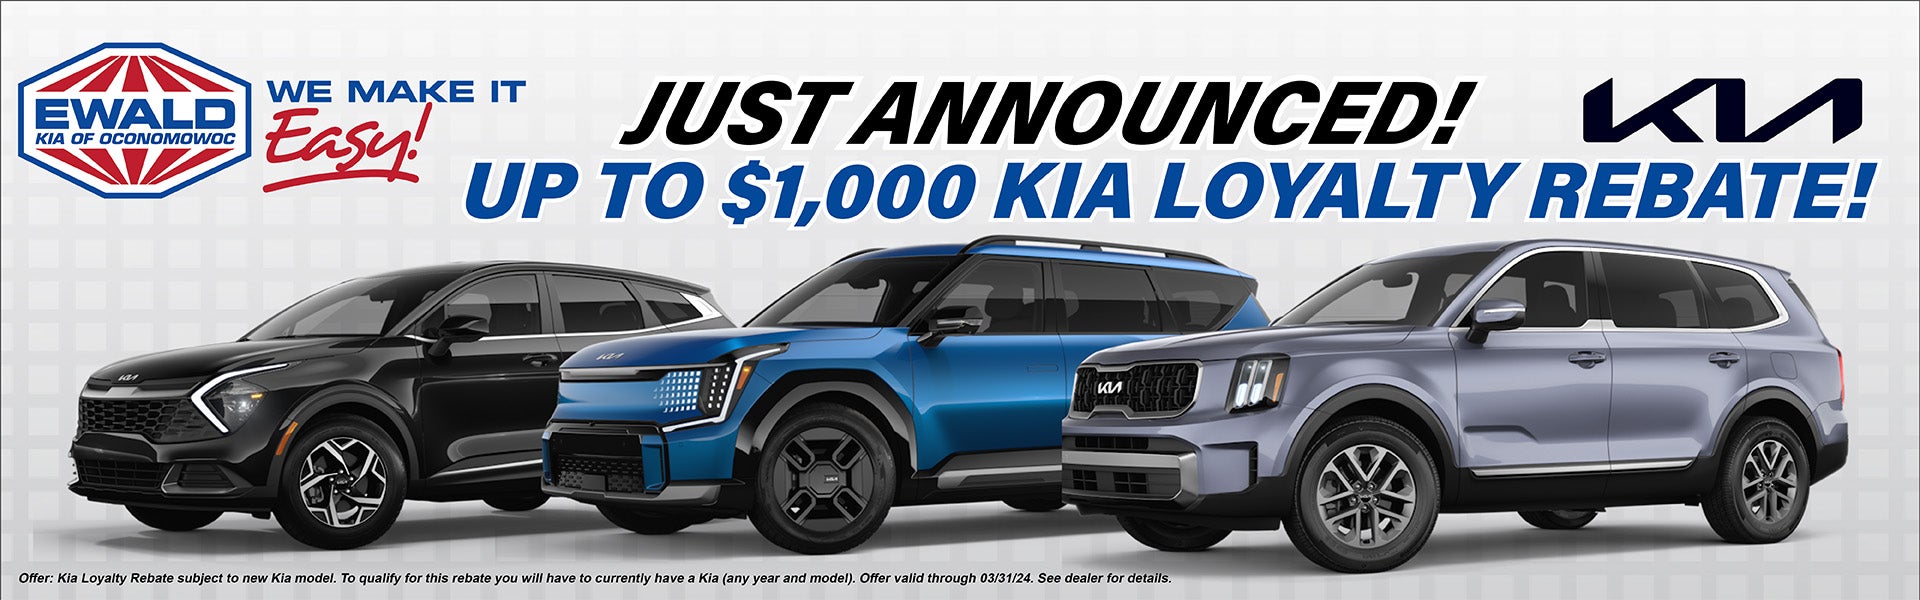 Up to $1,000 in Kia Loyalty Rebates!